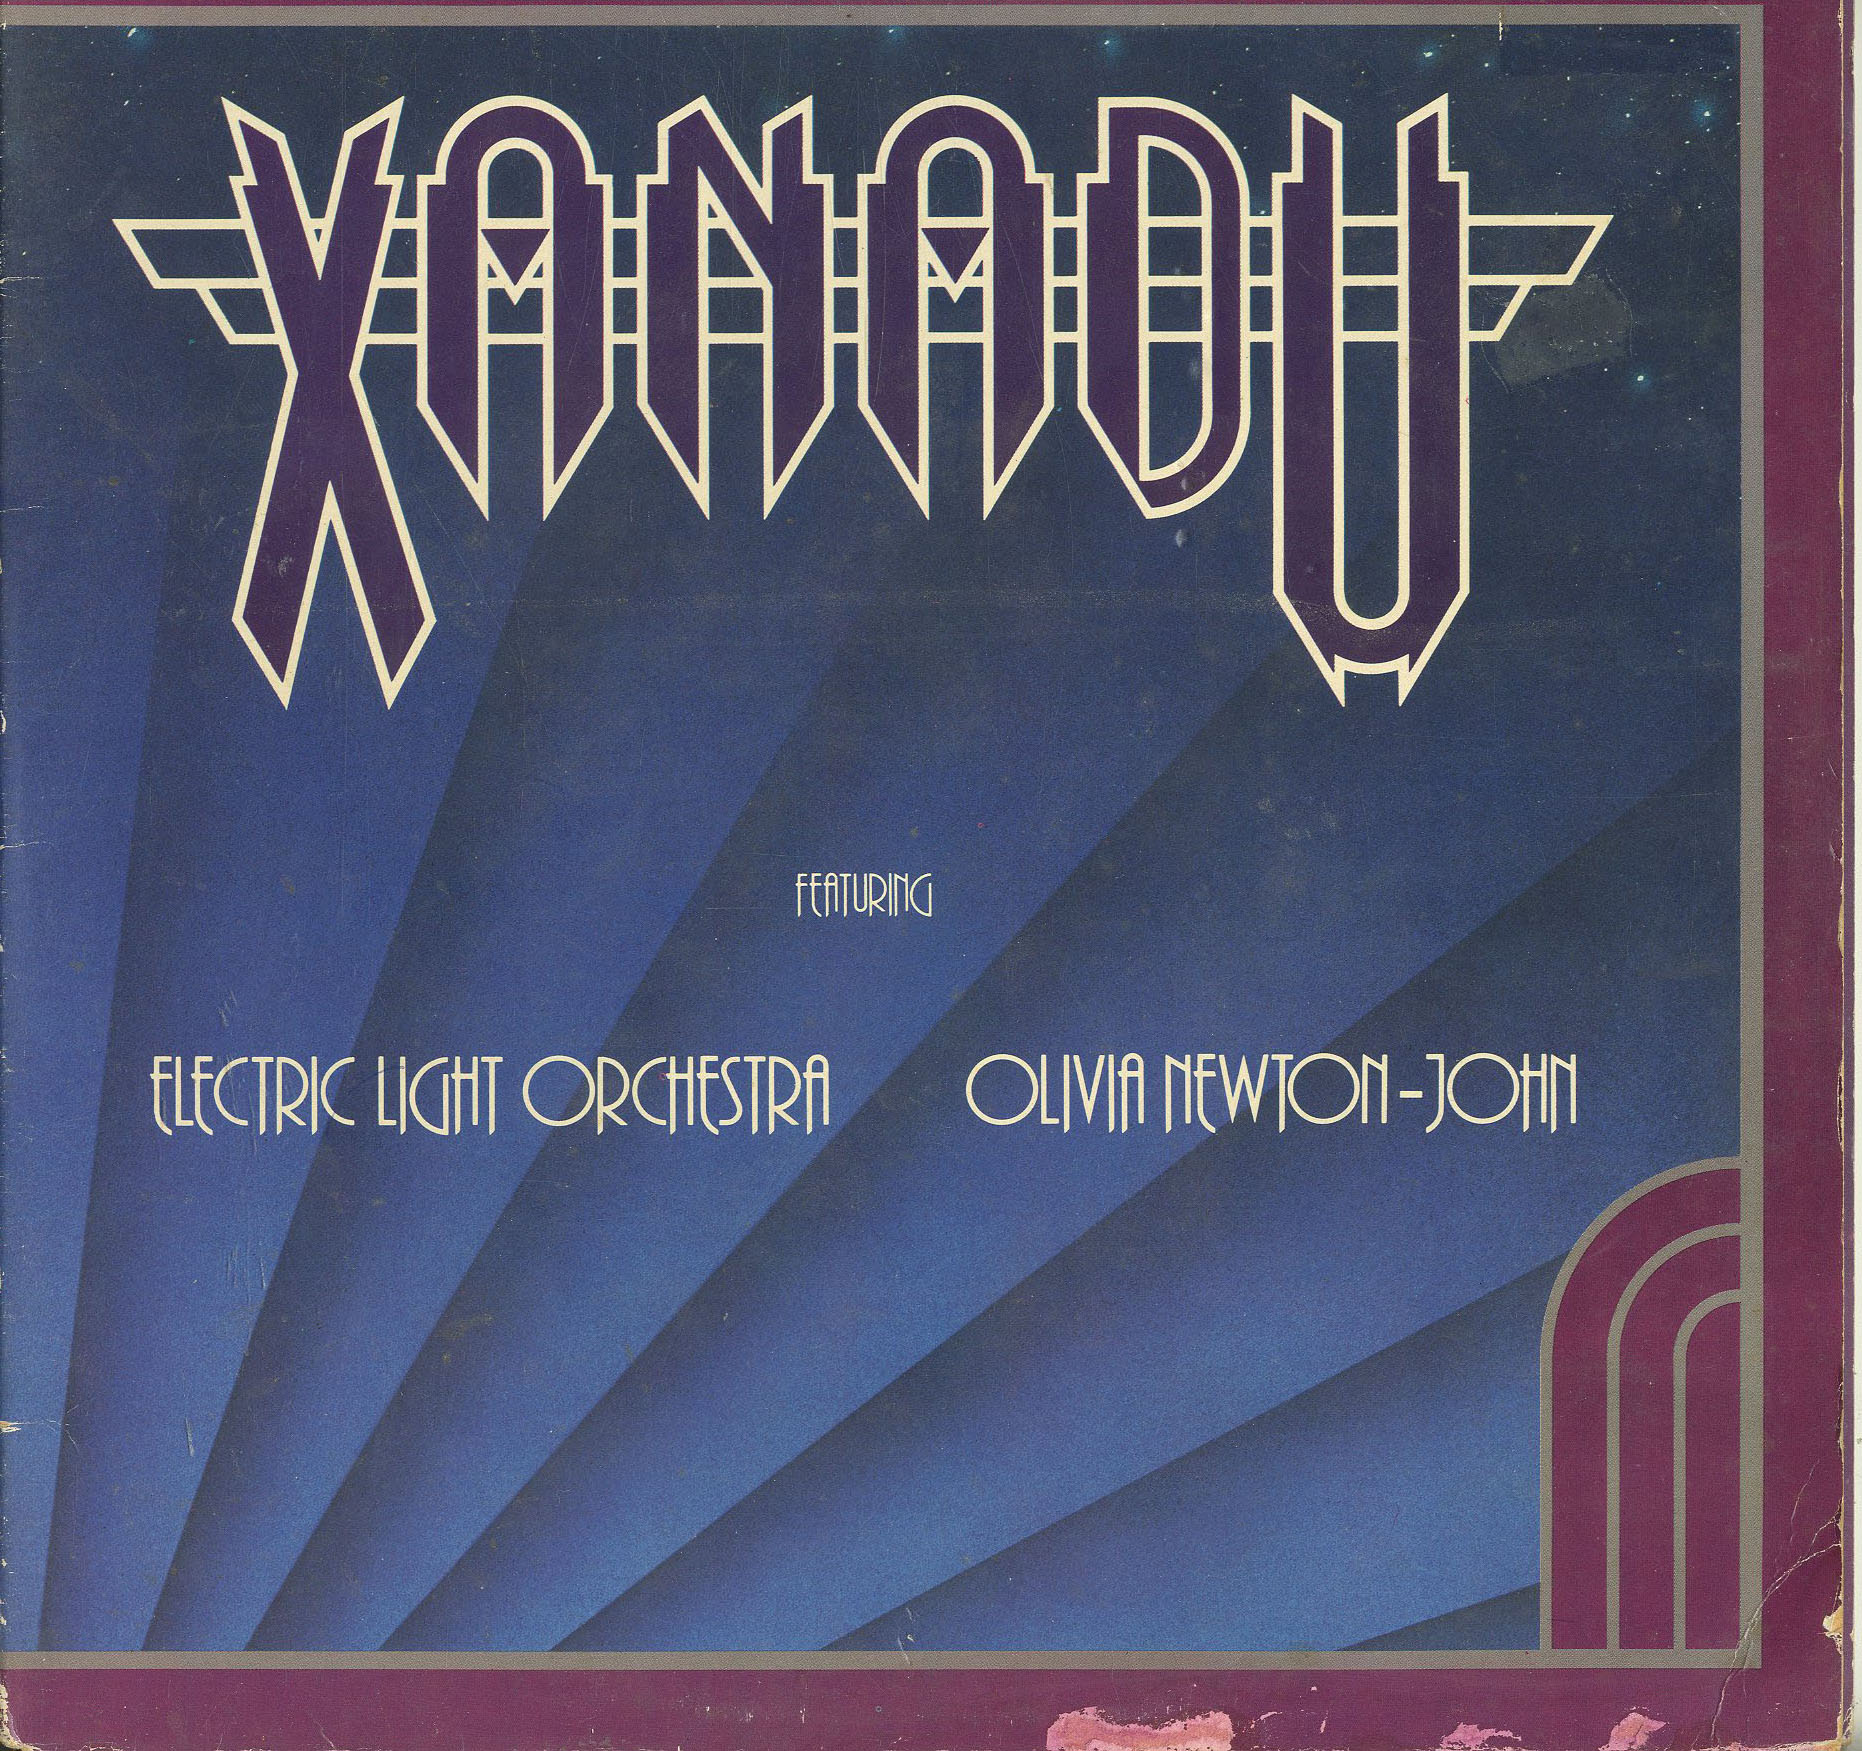 Albumcover Xanadu - Xanadu, Featuring Electric Light Orchestra + Olivia Newton-John